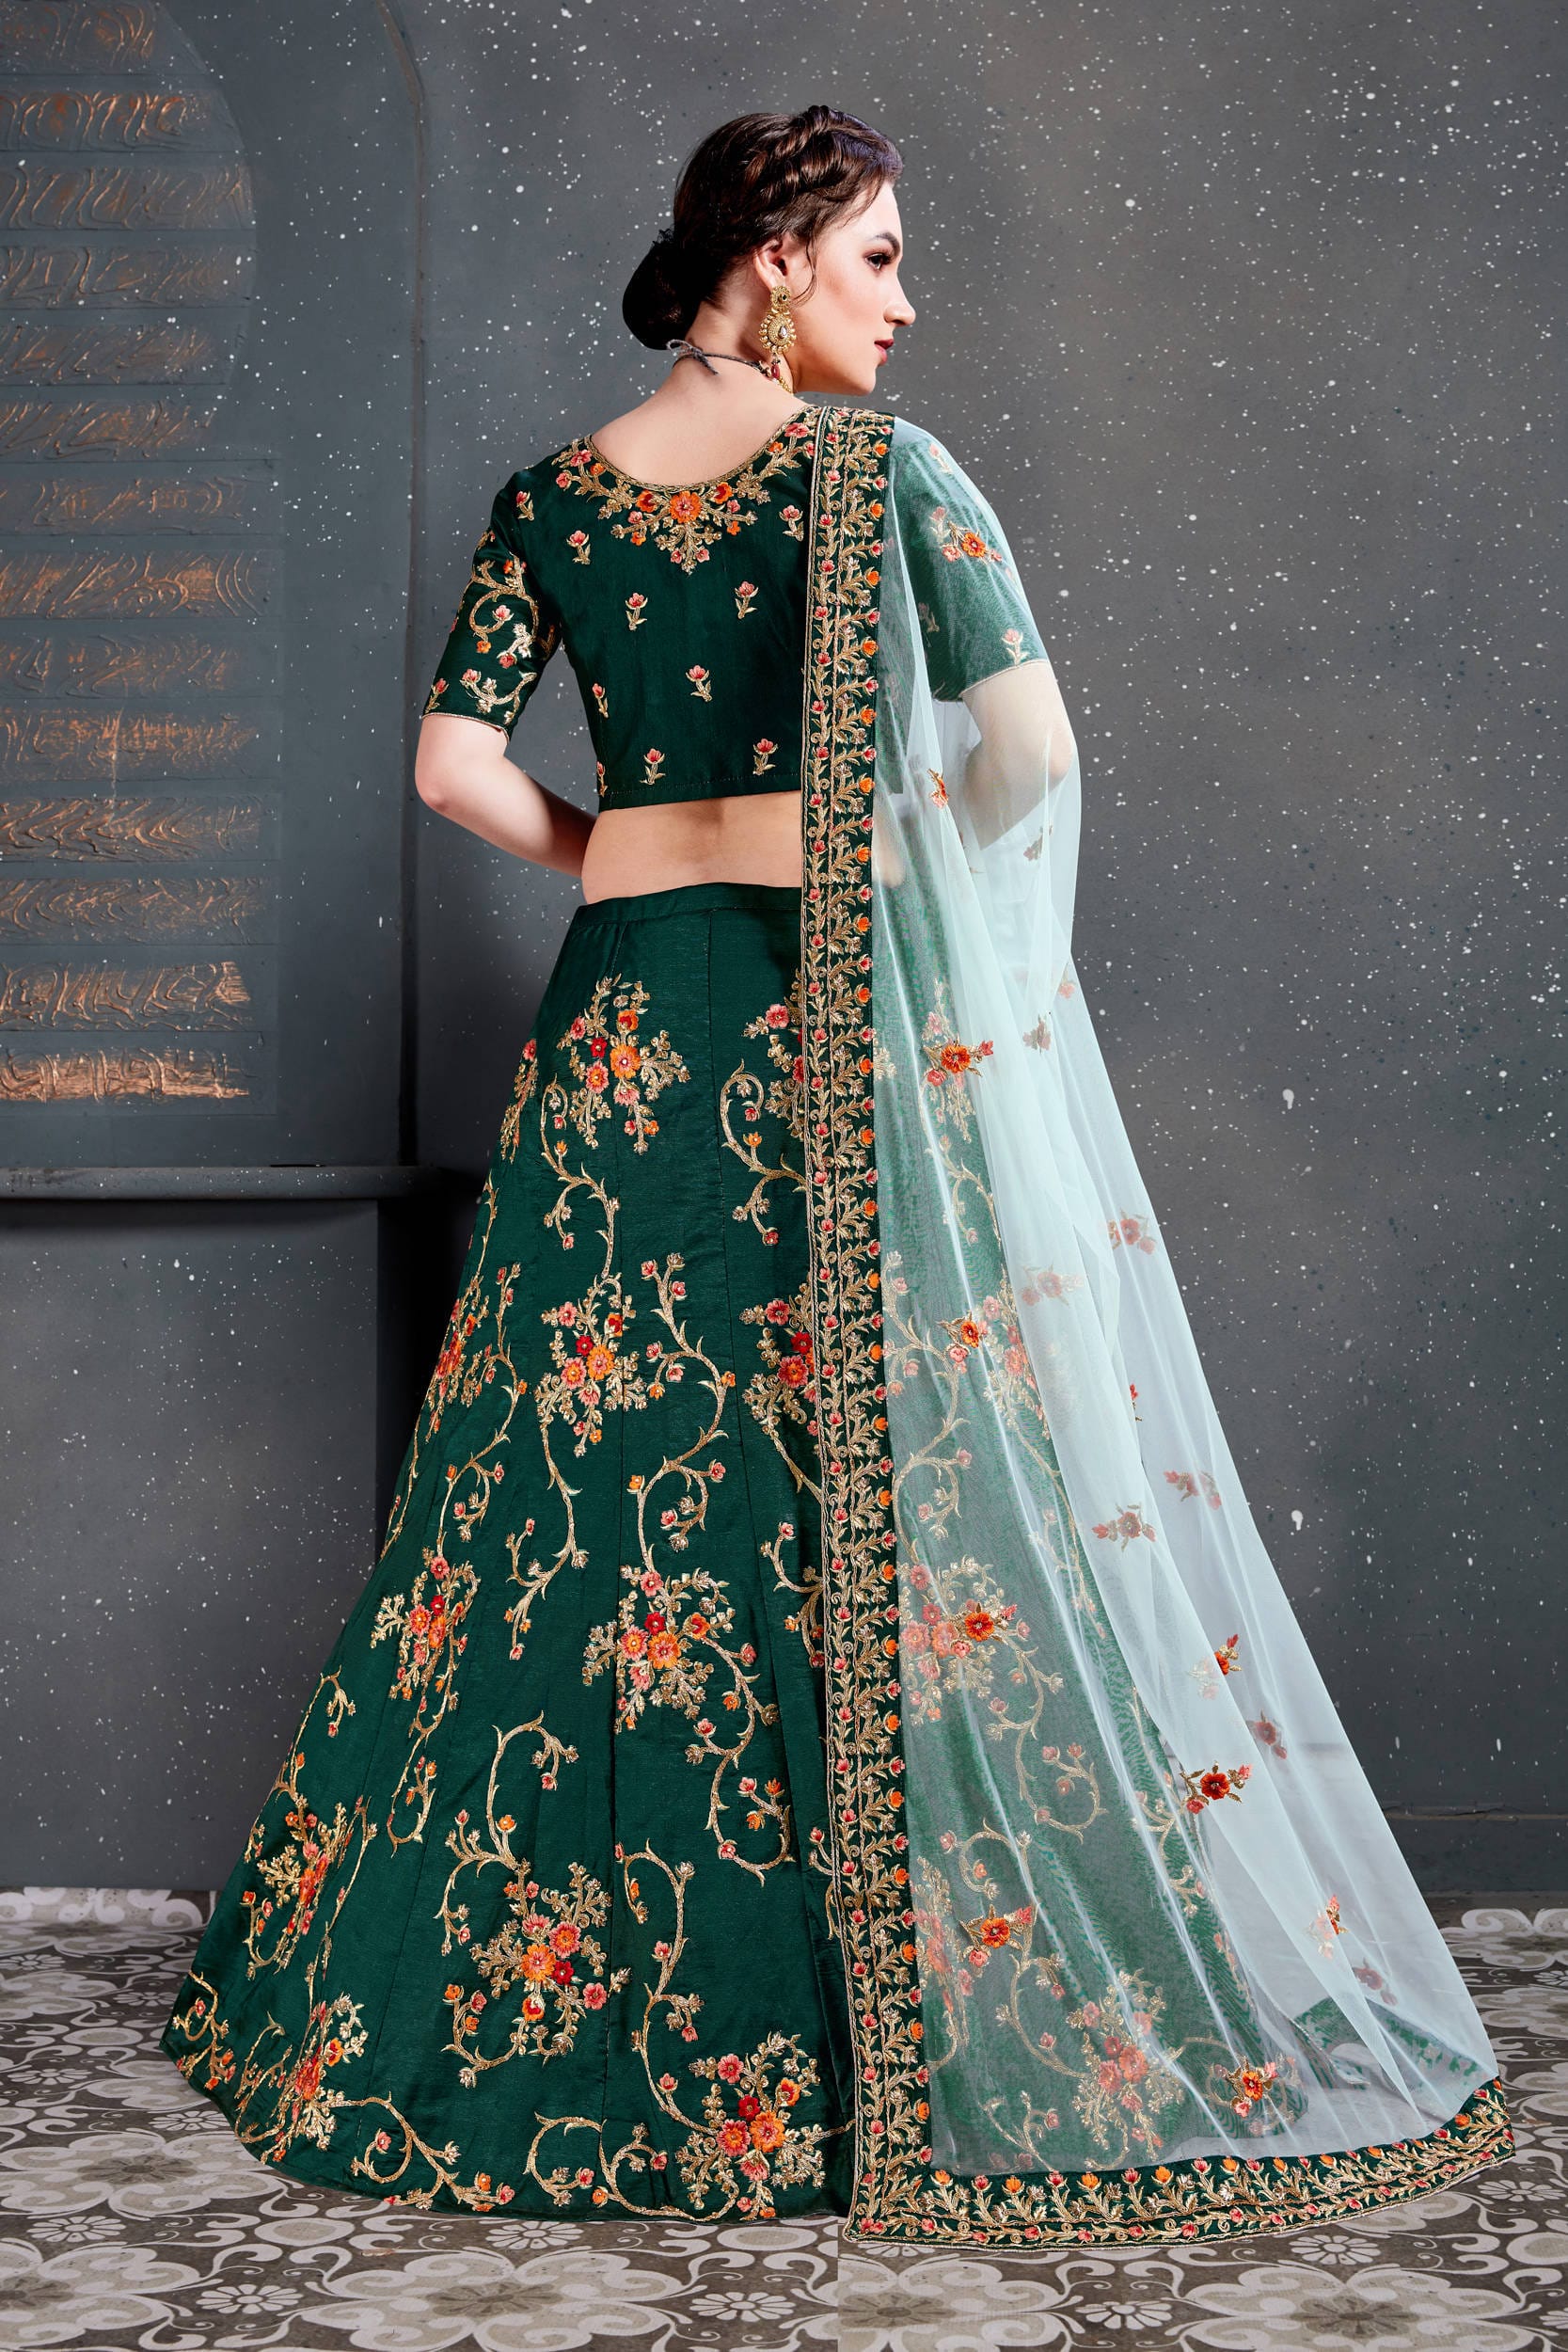 Green Thread, Dori, Zari Embroidered Lehenga Choli with Diamond Work - Perfect for Party & Wedding Wear in Tafeta Satin Silk